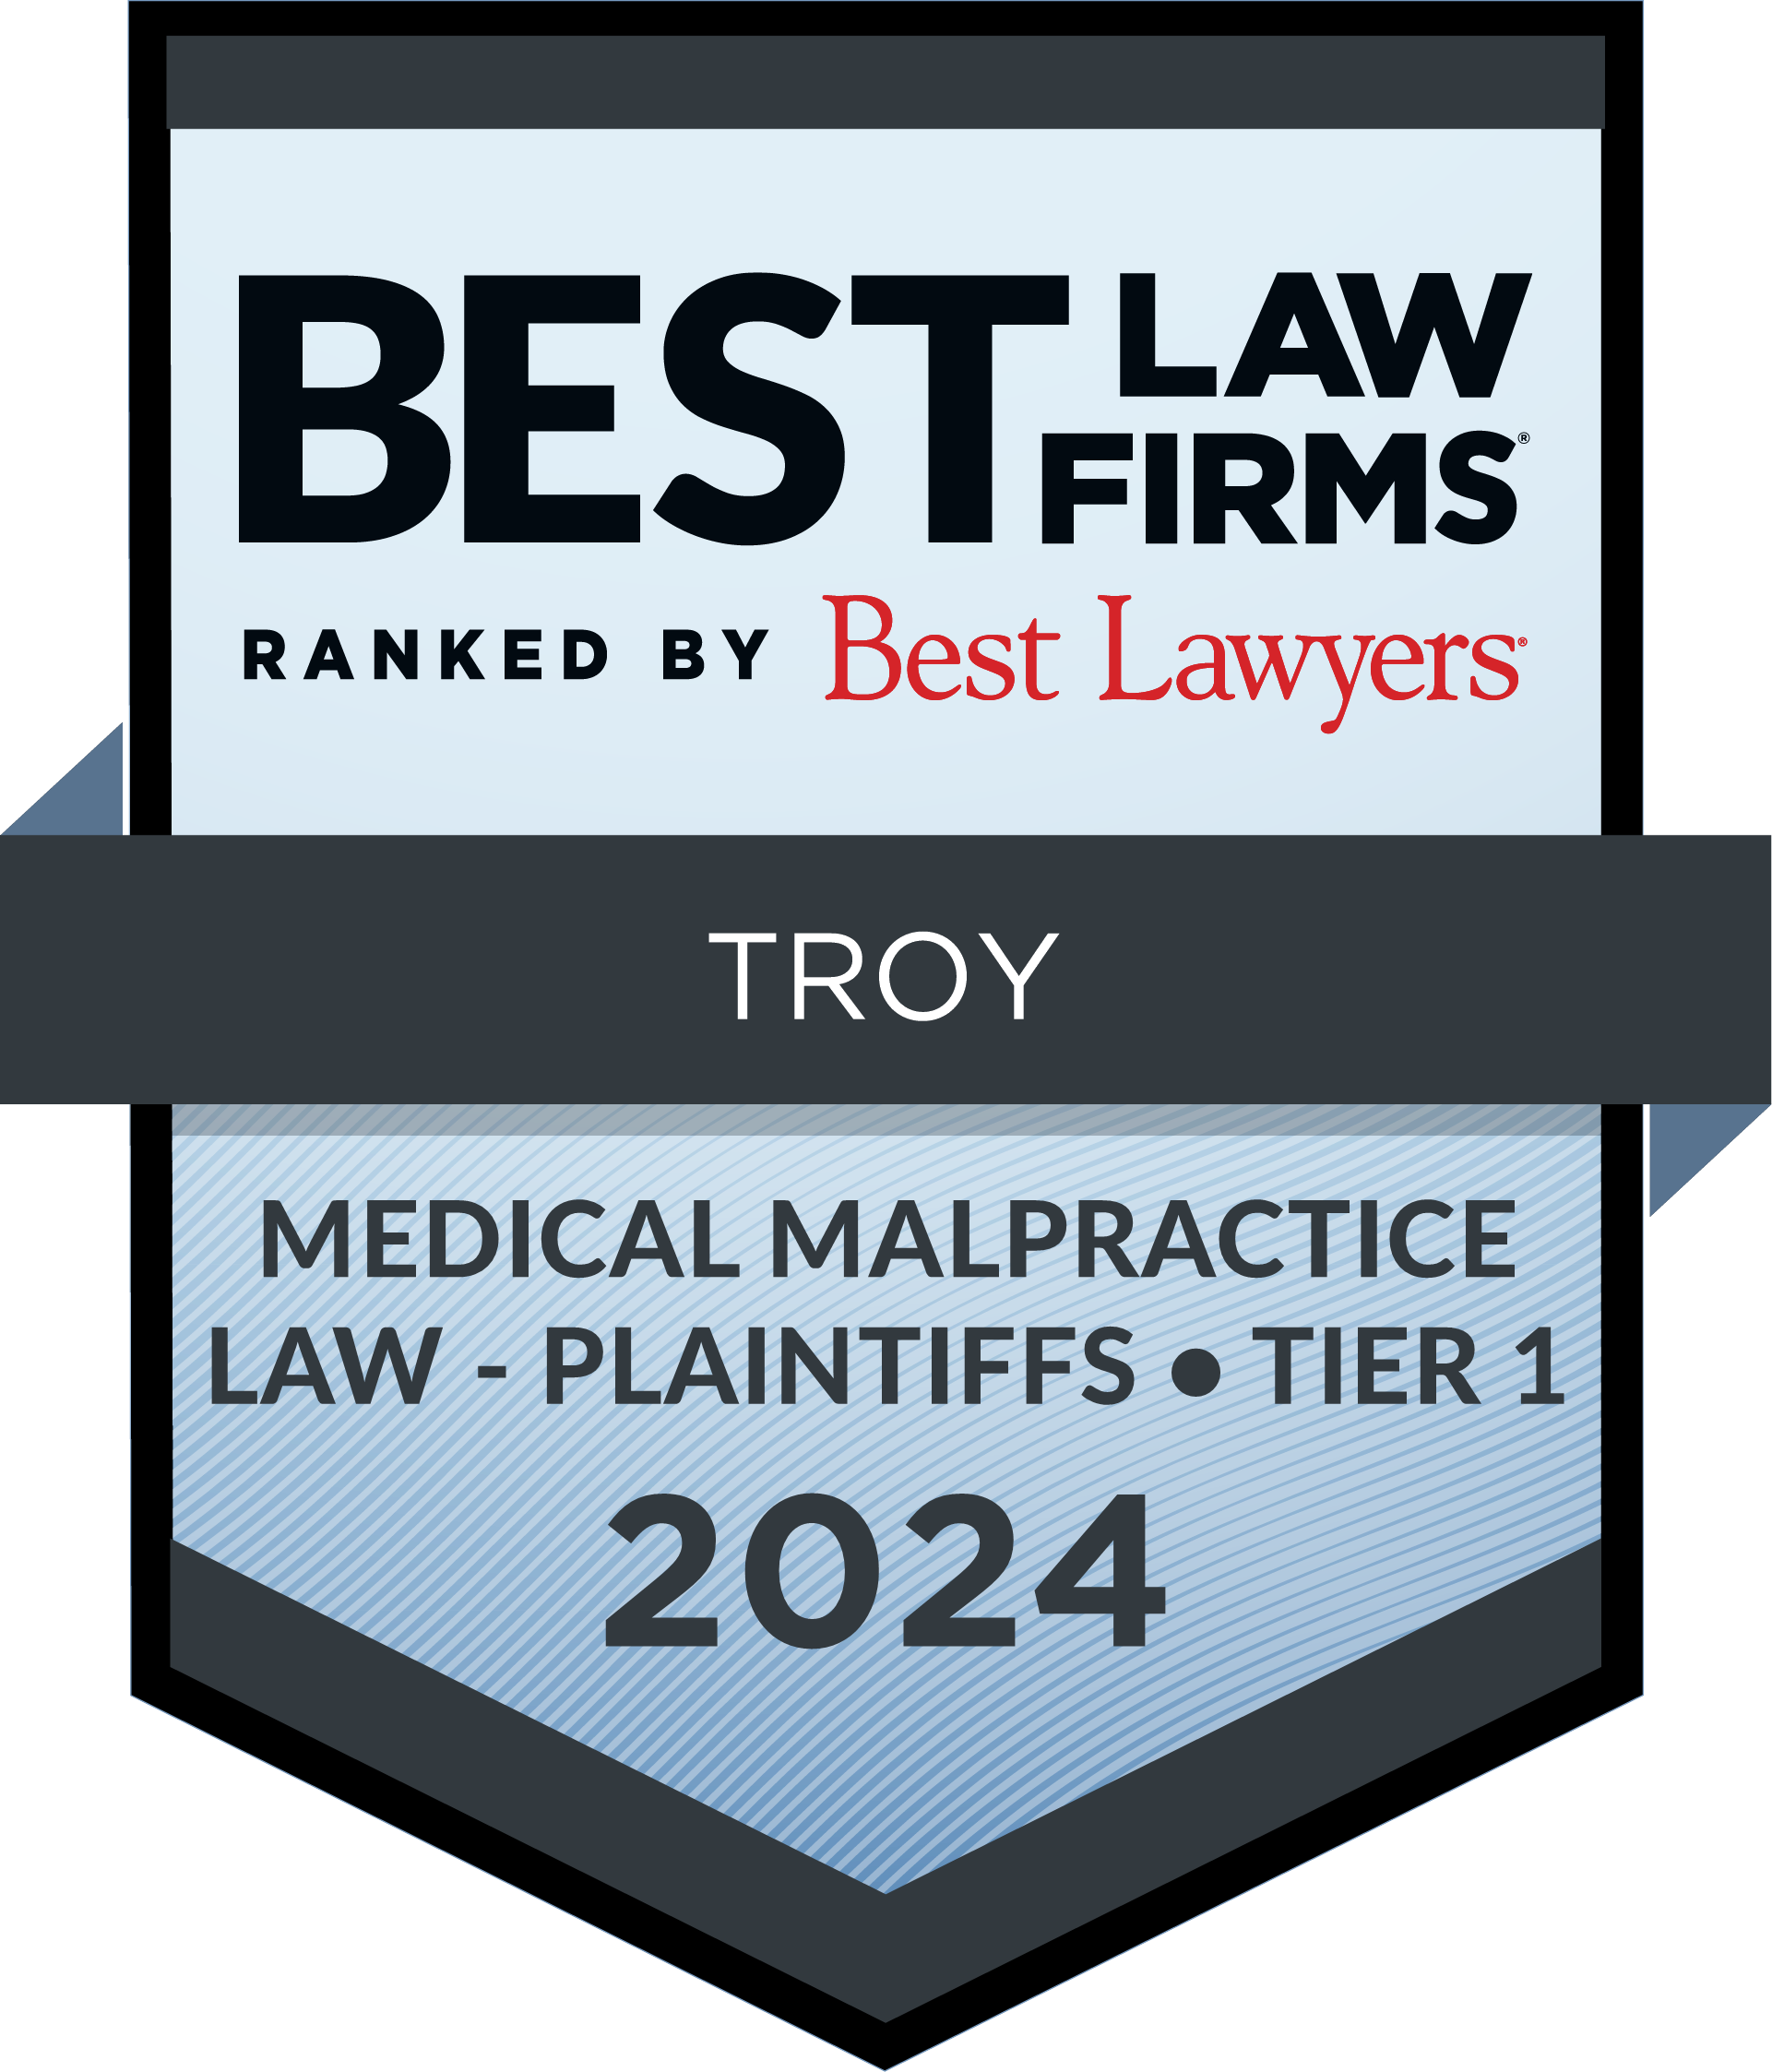 As Ranked by Best Lawyers: Best Law Firms in Troy - Medical Malpractice Law - Plaintiffs, Tier 1, 2024